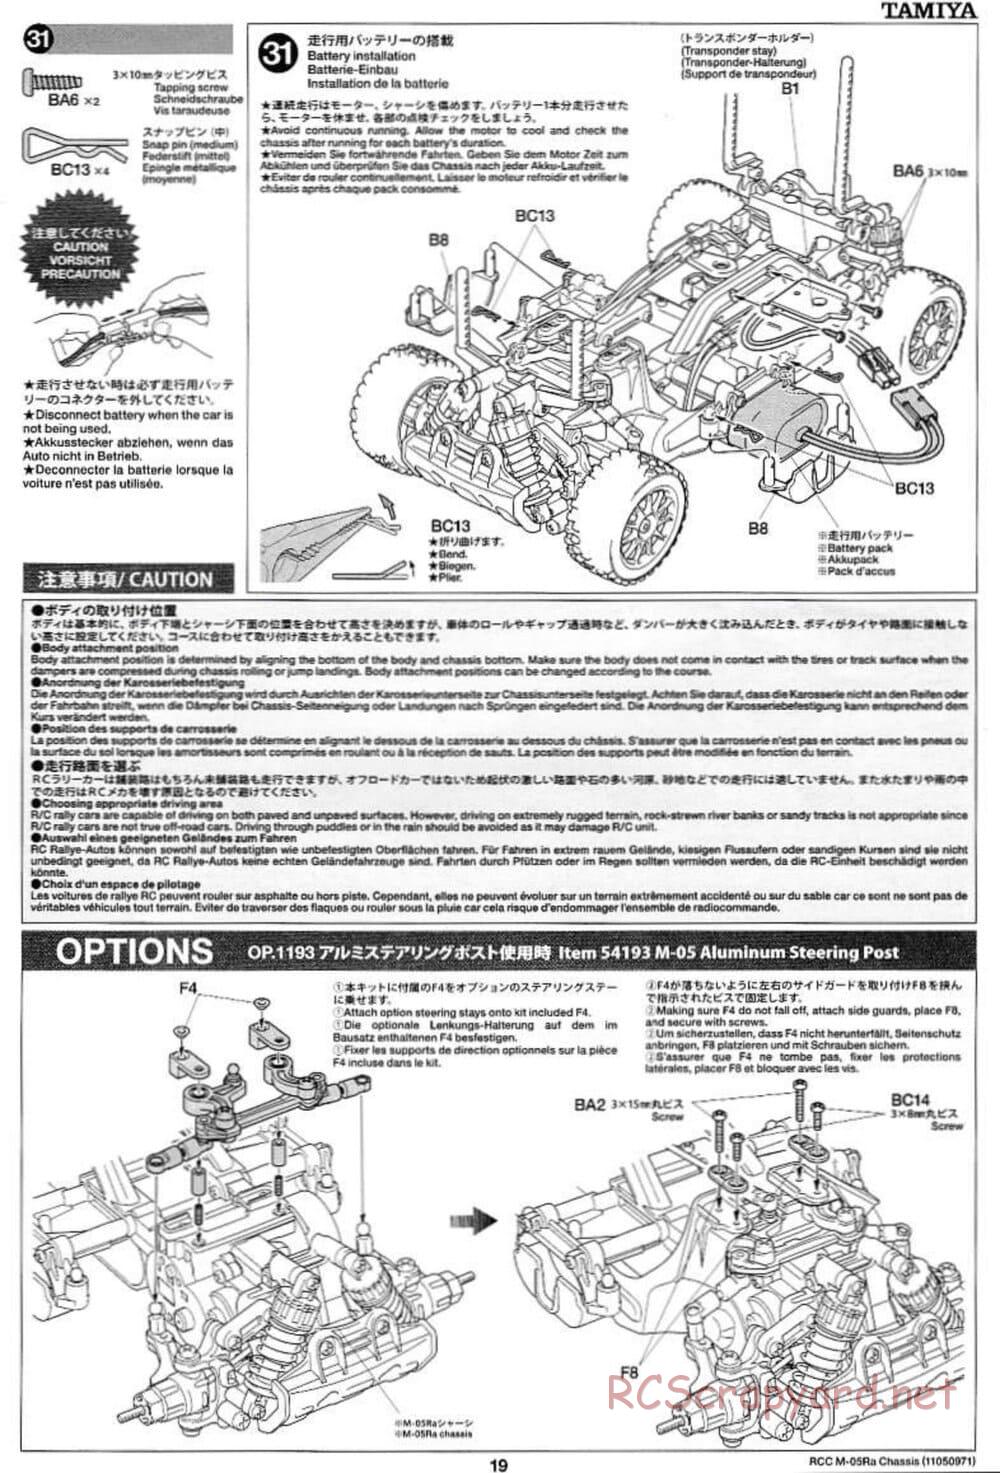 Tamiya - M-05Ra Chassis - Manual - Page 19